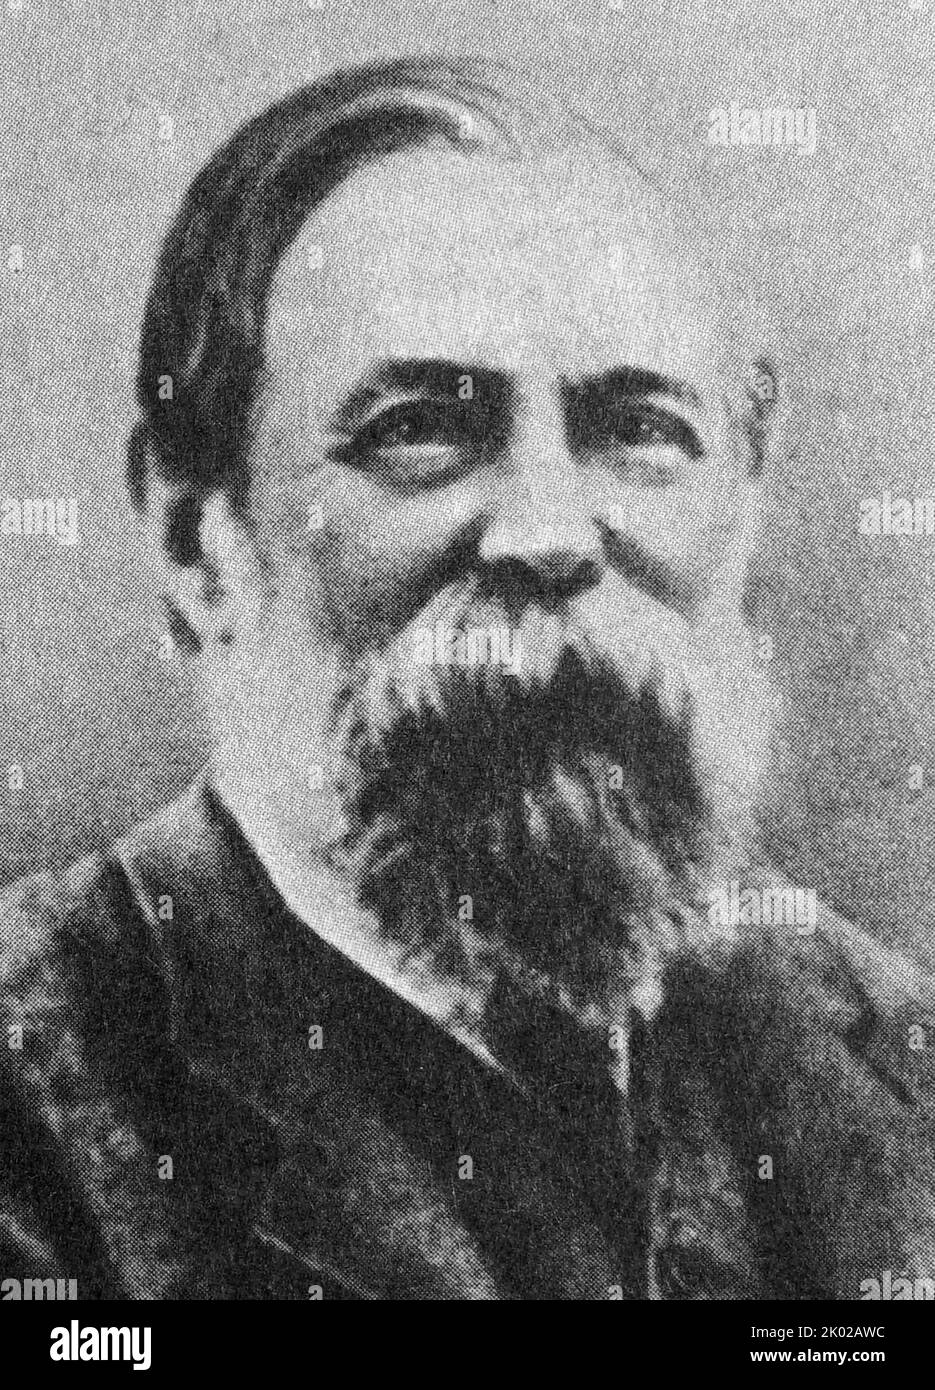 Friedrich Engels (1820 - 1895), German philosopher, historian, political scientist and revolutionary socialist. Stock Photo